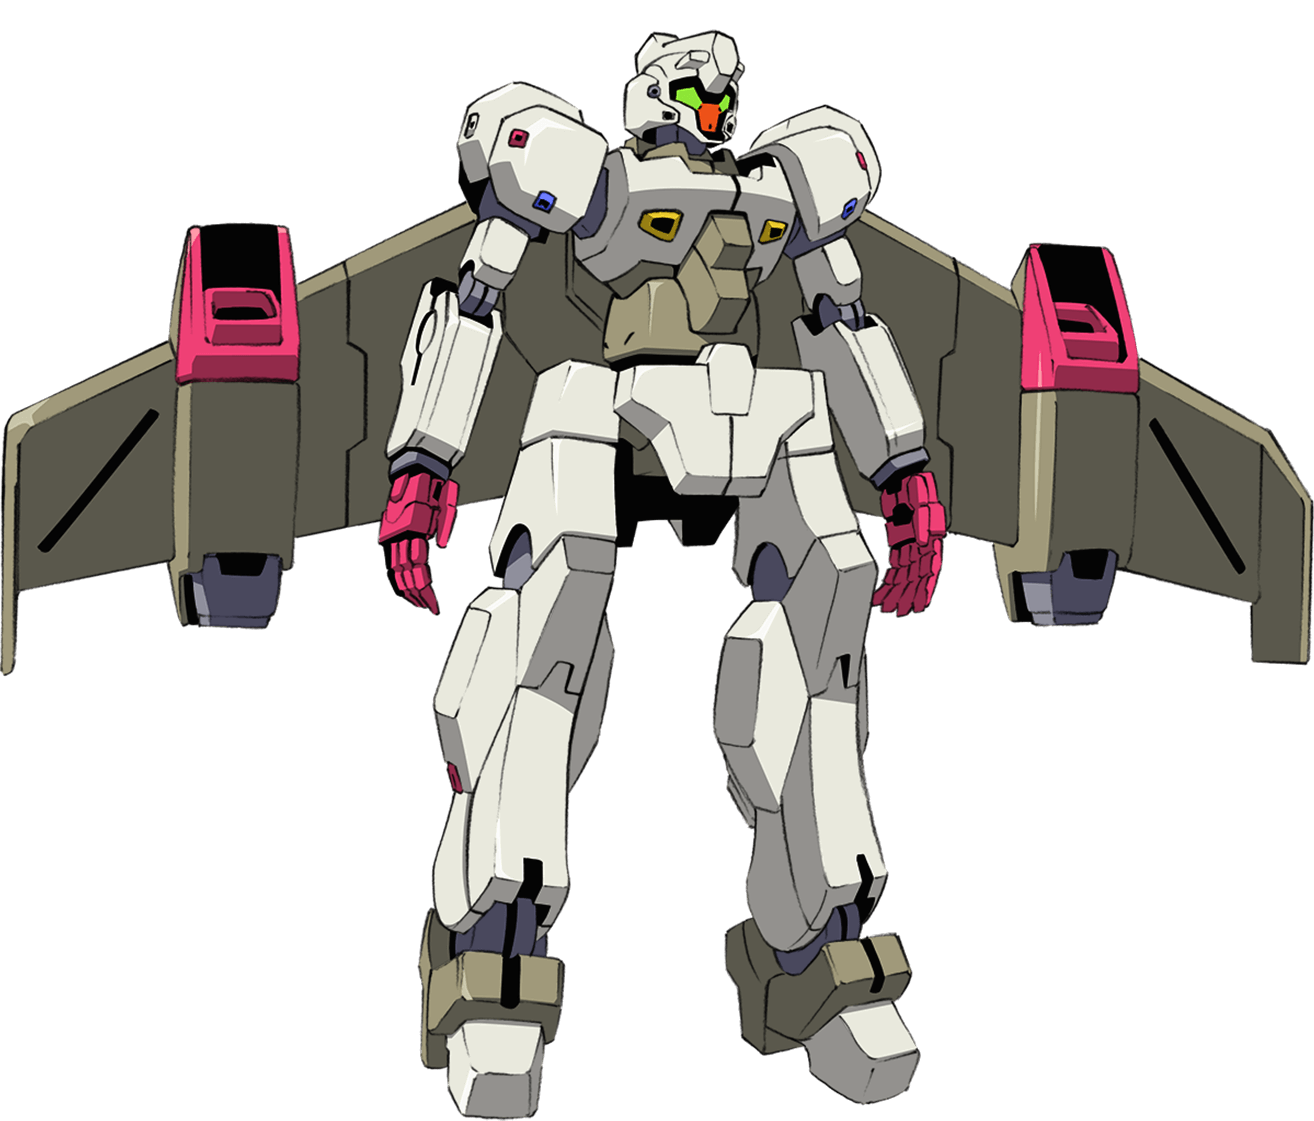 CAMS-02 Catsith, The Gundam Wiki